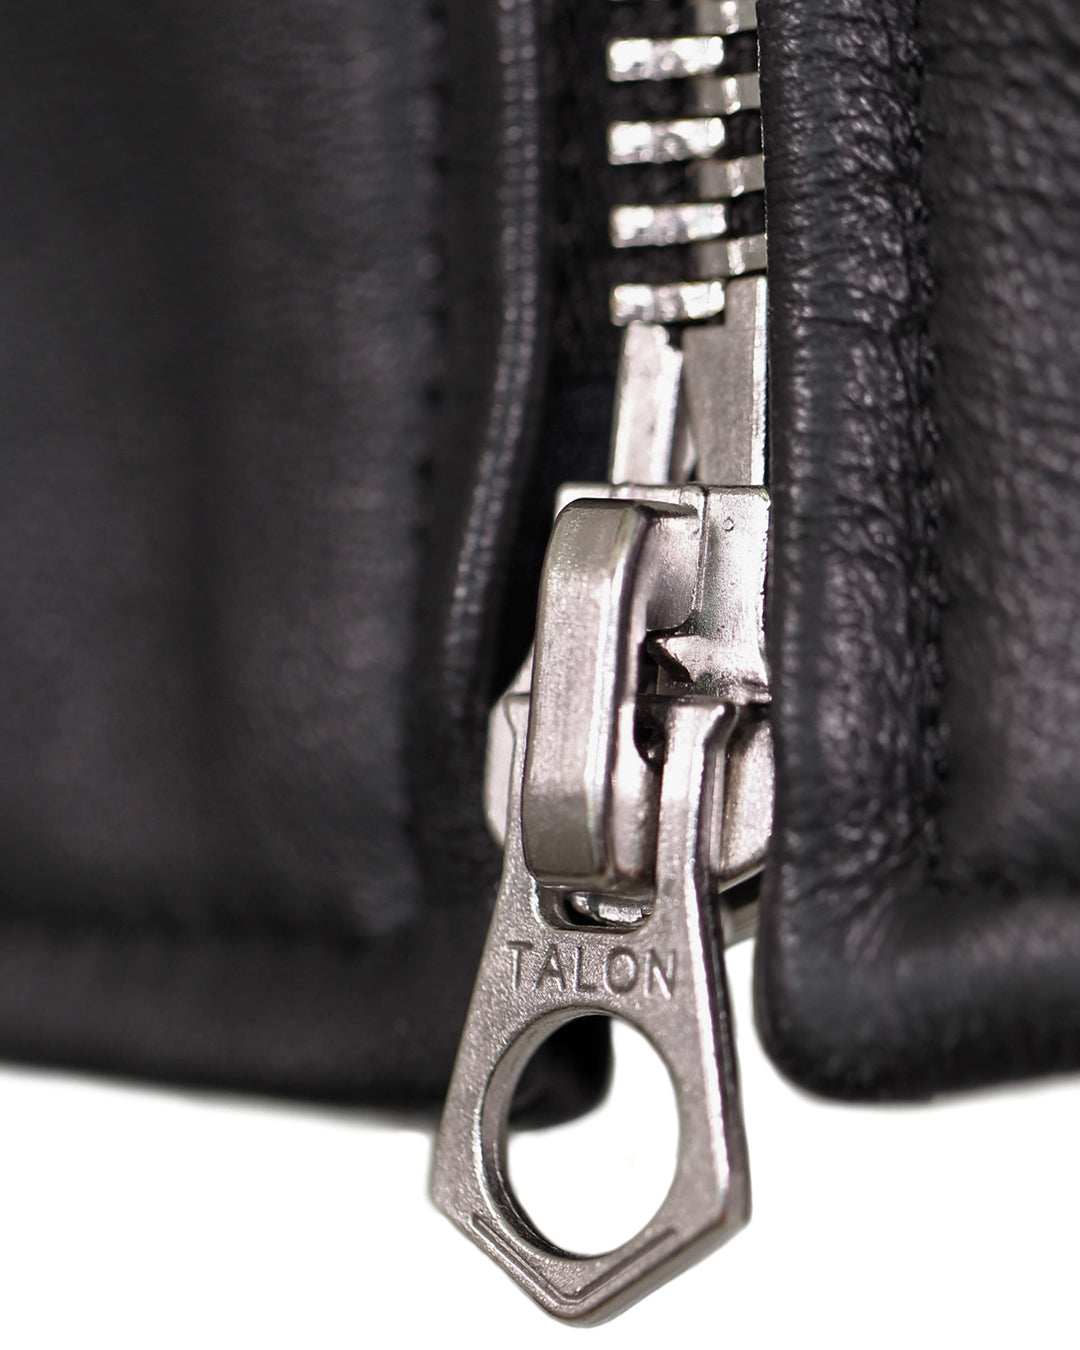 Styleforum+Luxire: Leather Moto Jacket MTM